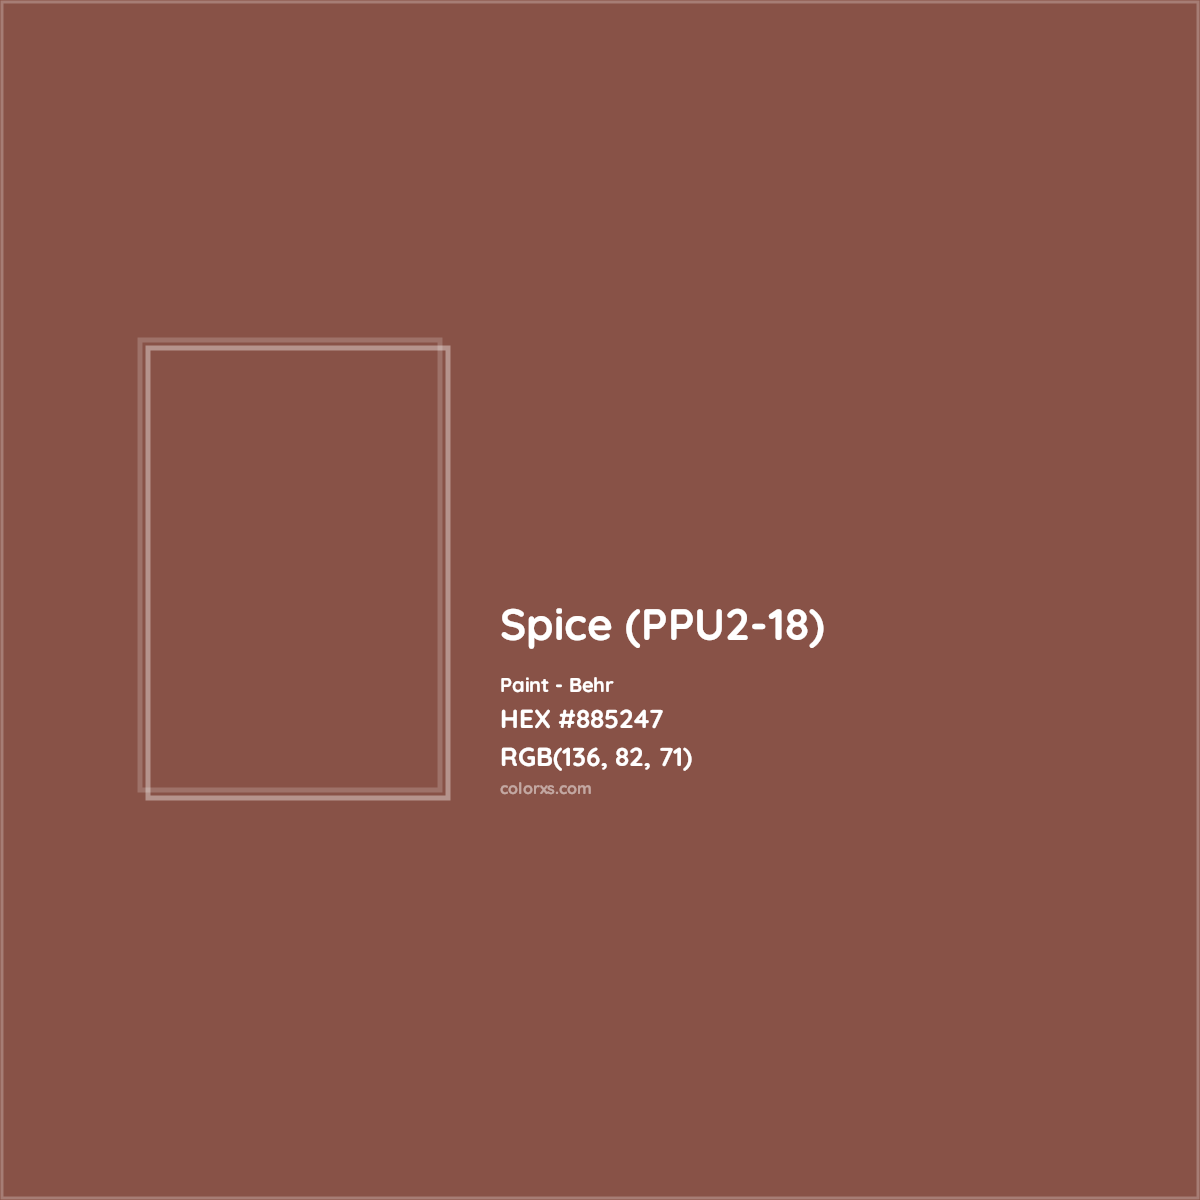 HEX #885247 Spice (PPU2-18) Paint Behr - Color Code